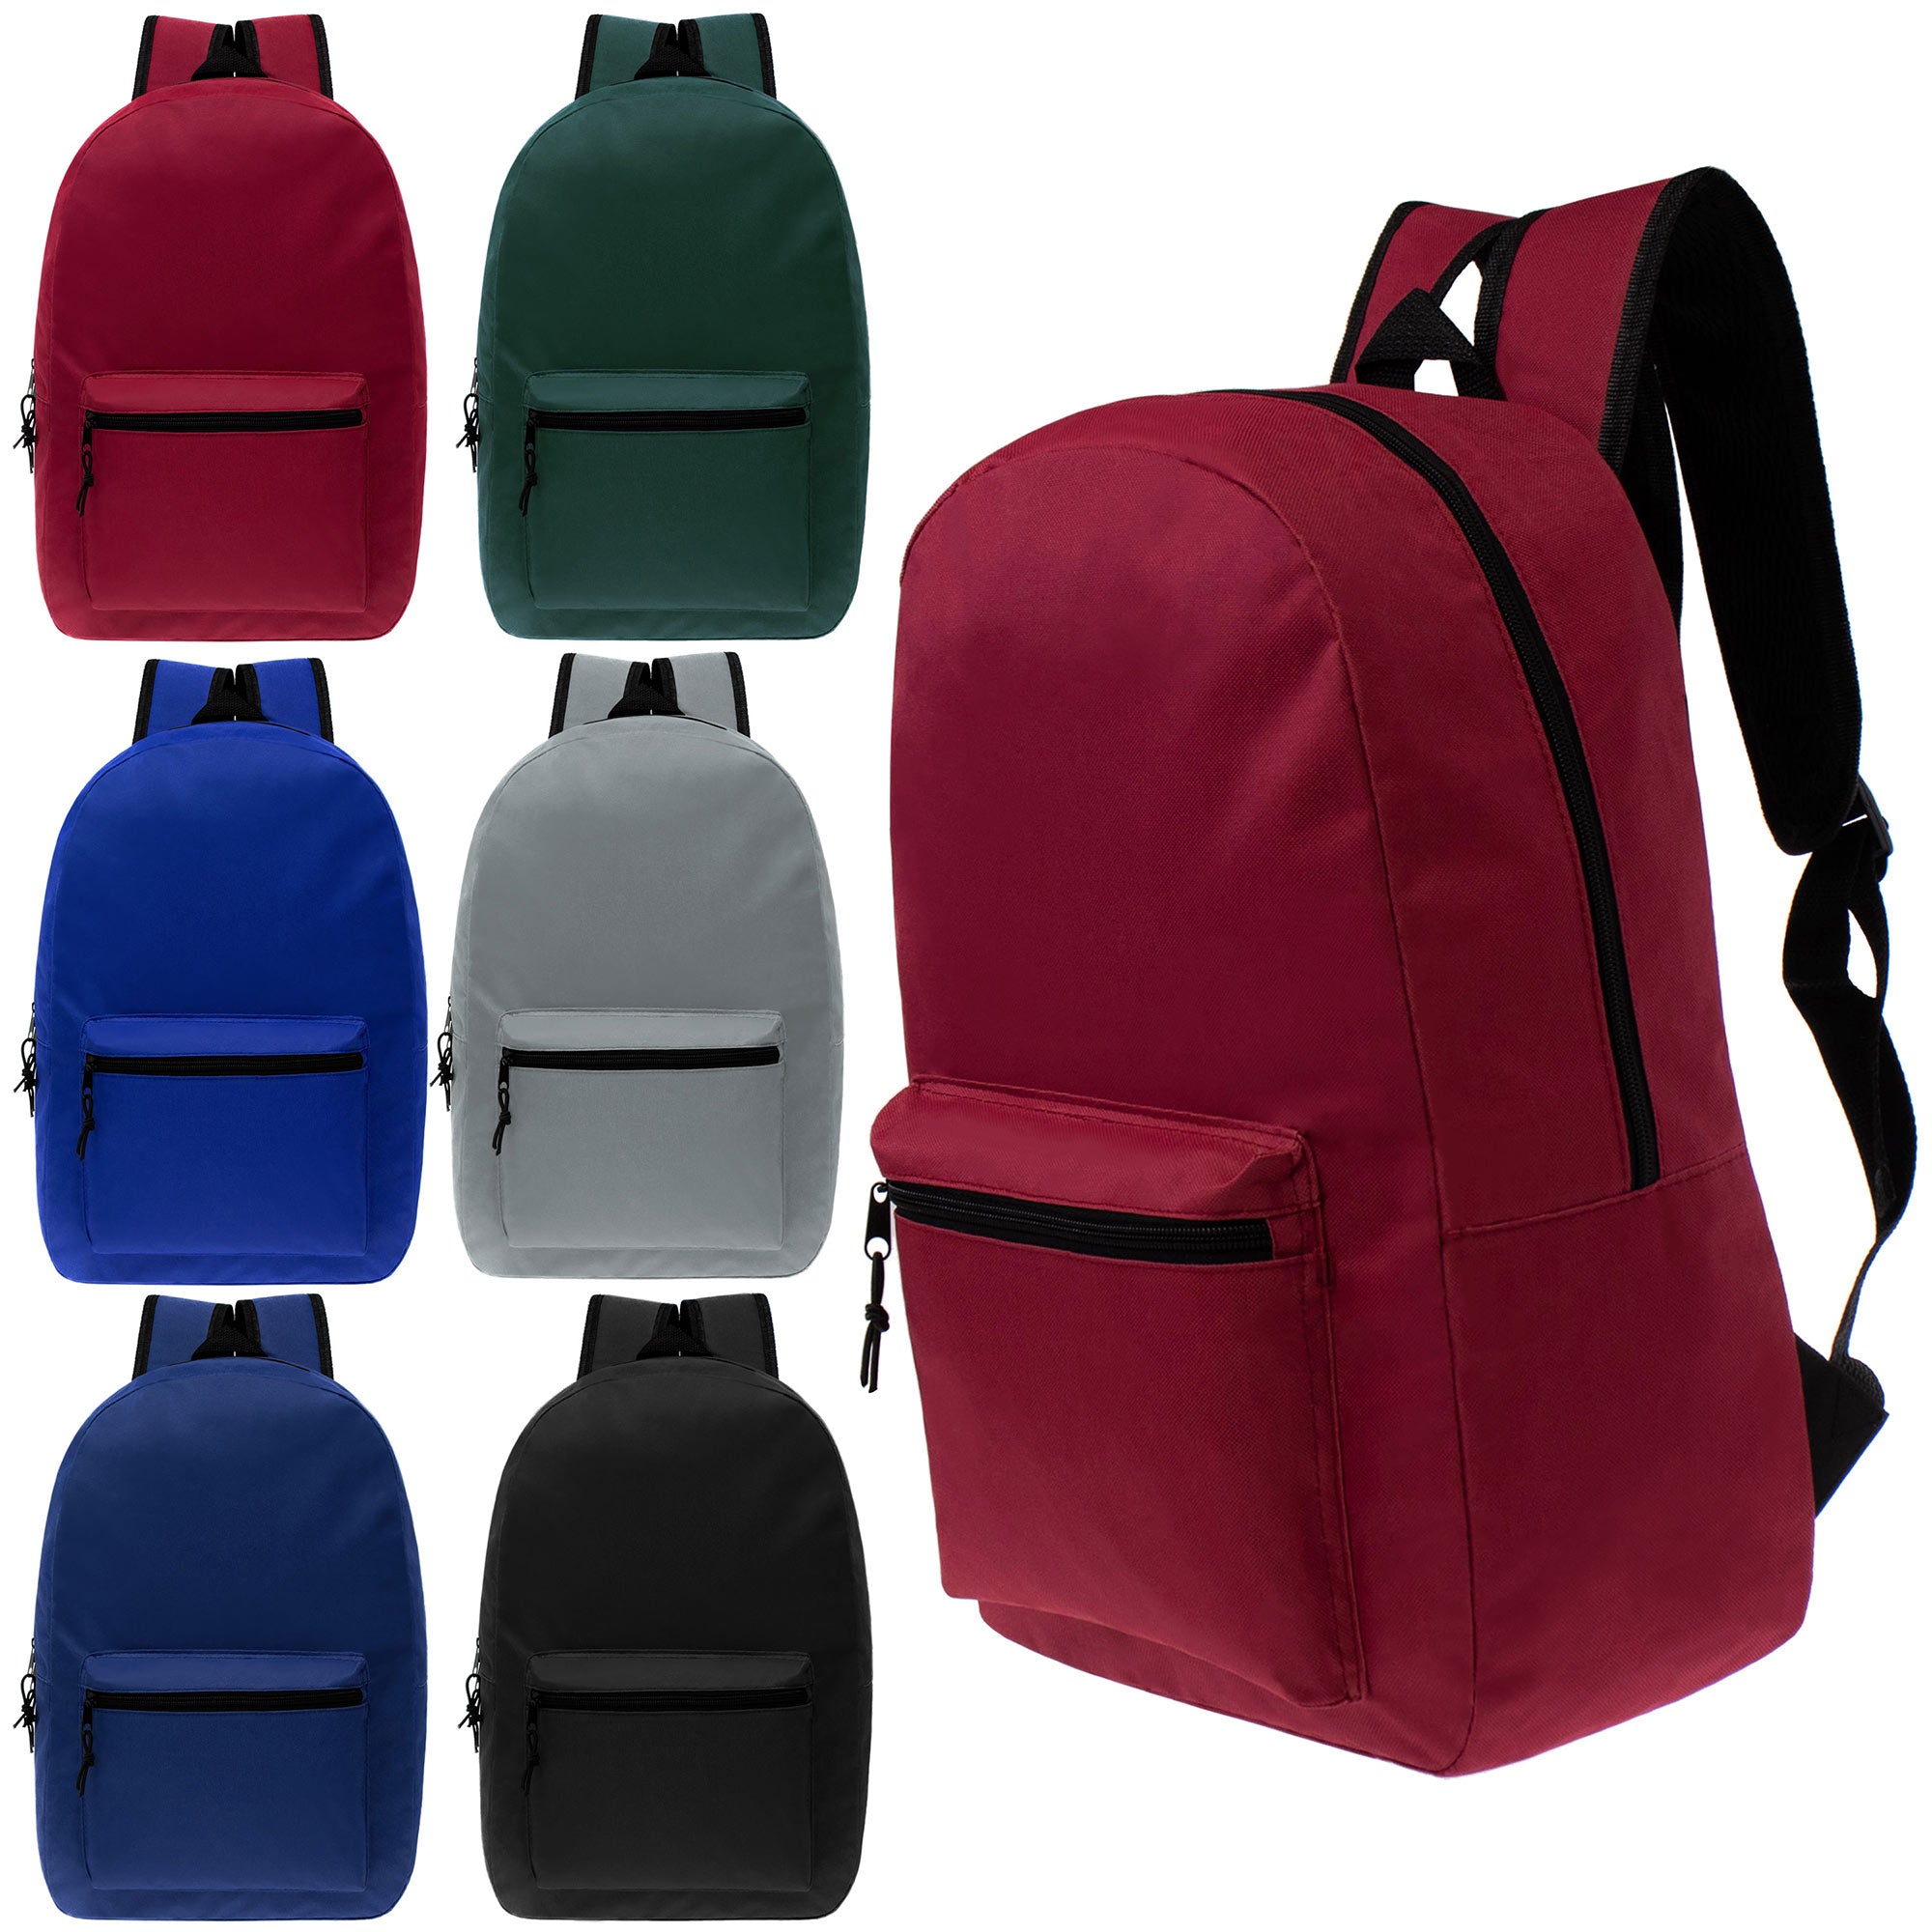 $2 - $5 Bulk Backpacks | Cheap Backpacks & Wholesale Bookbags